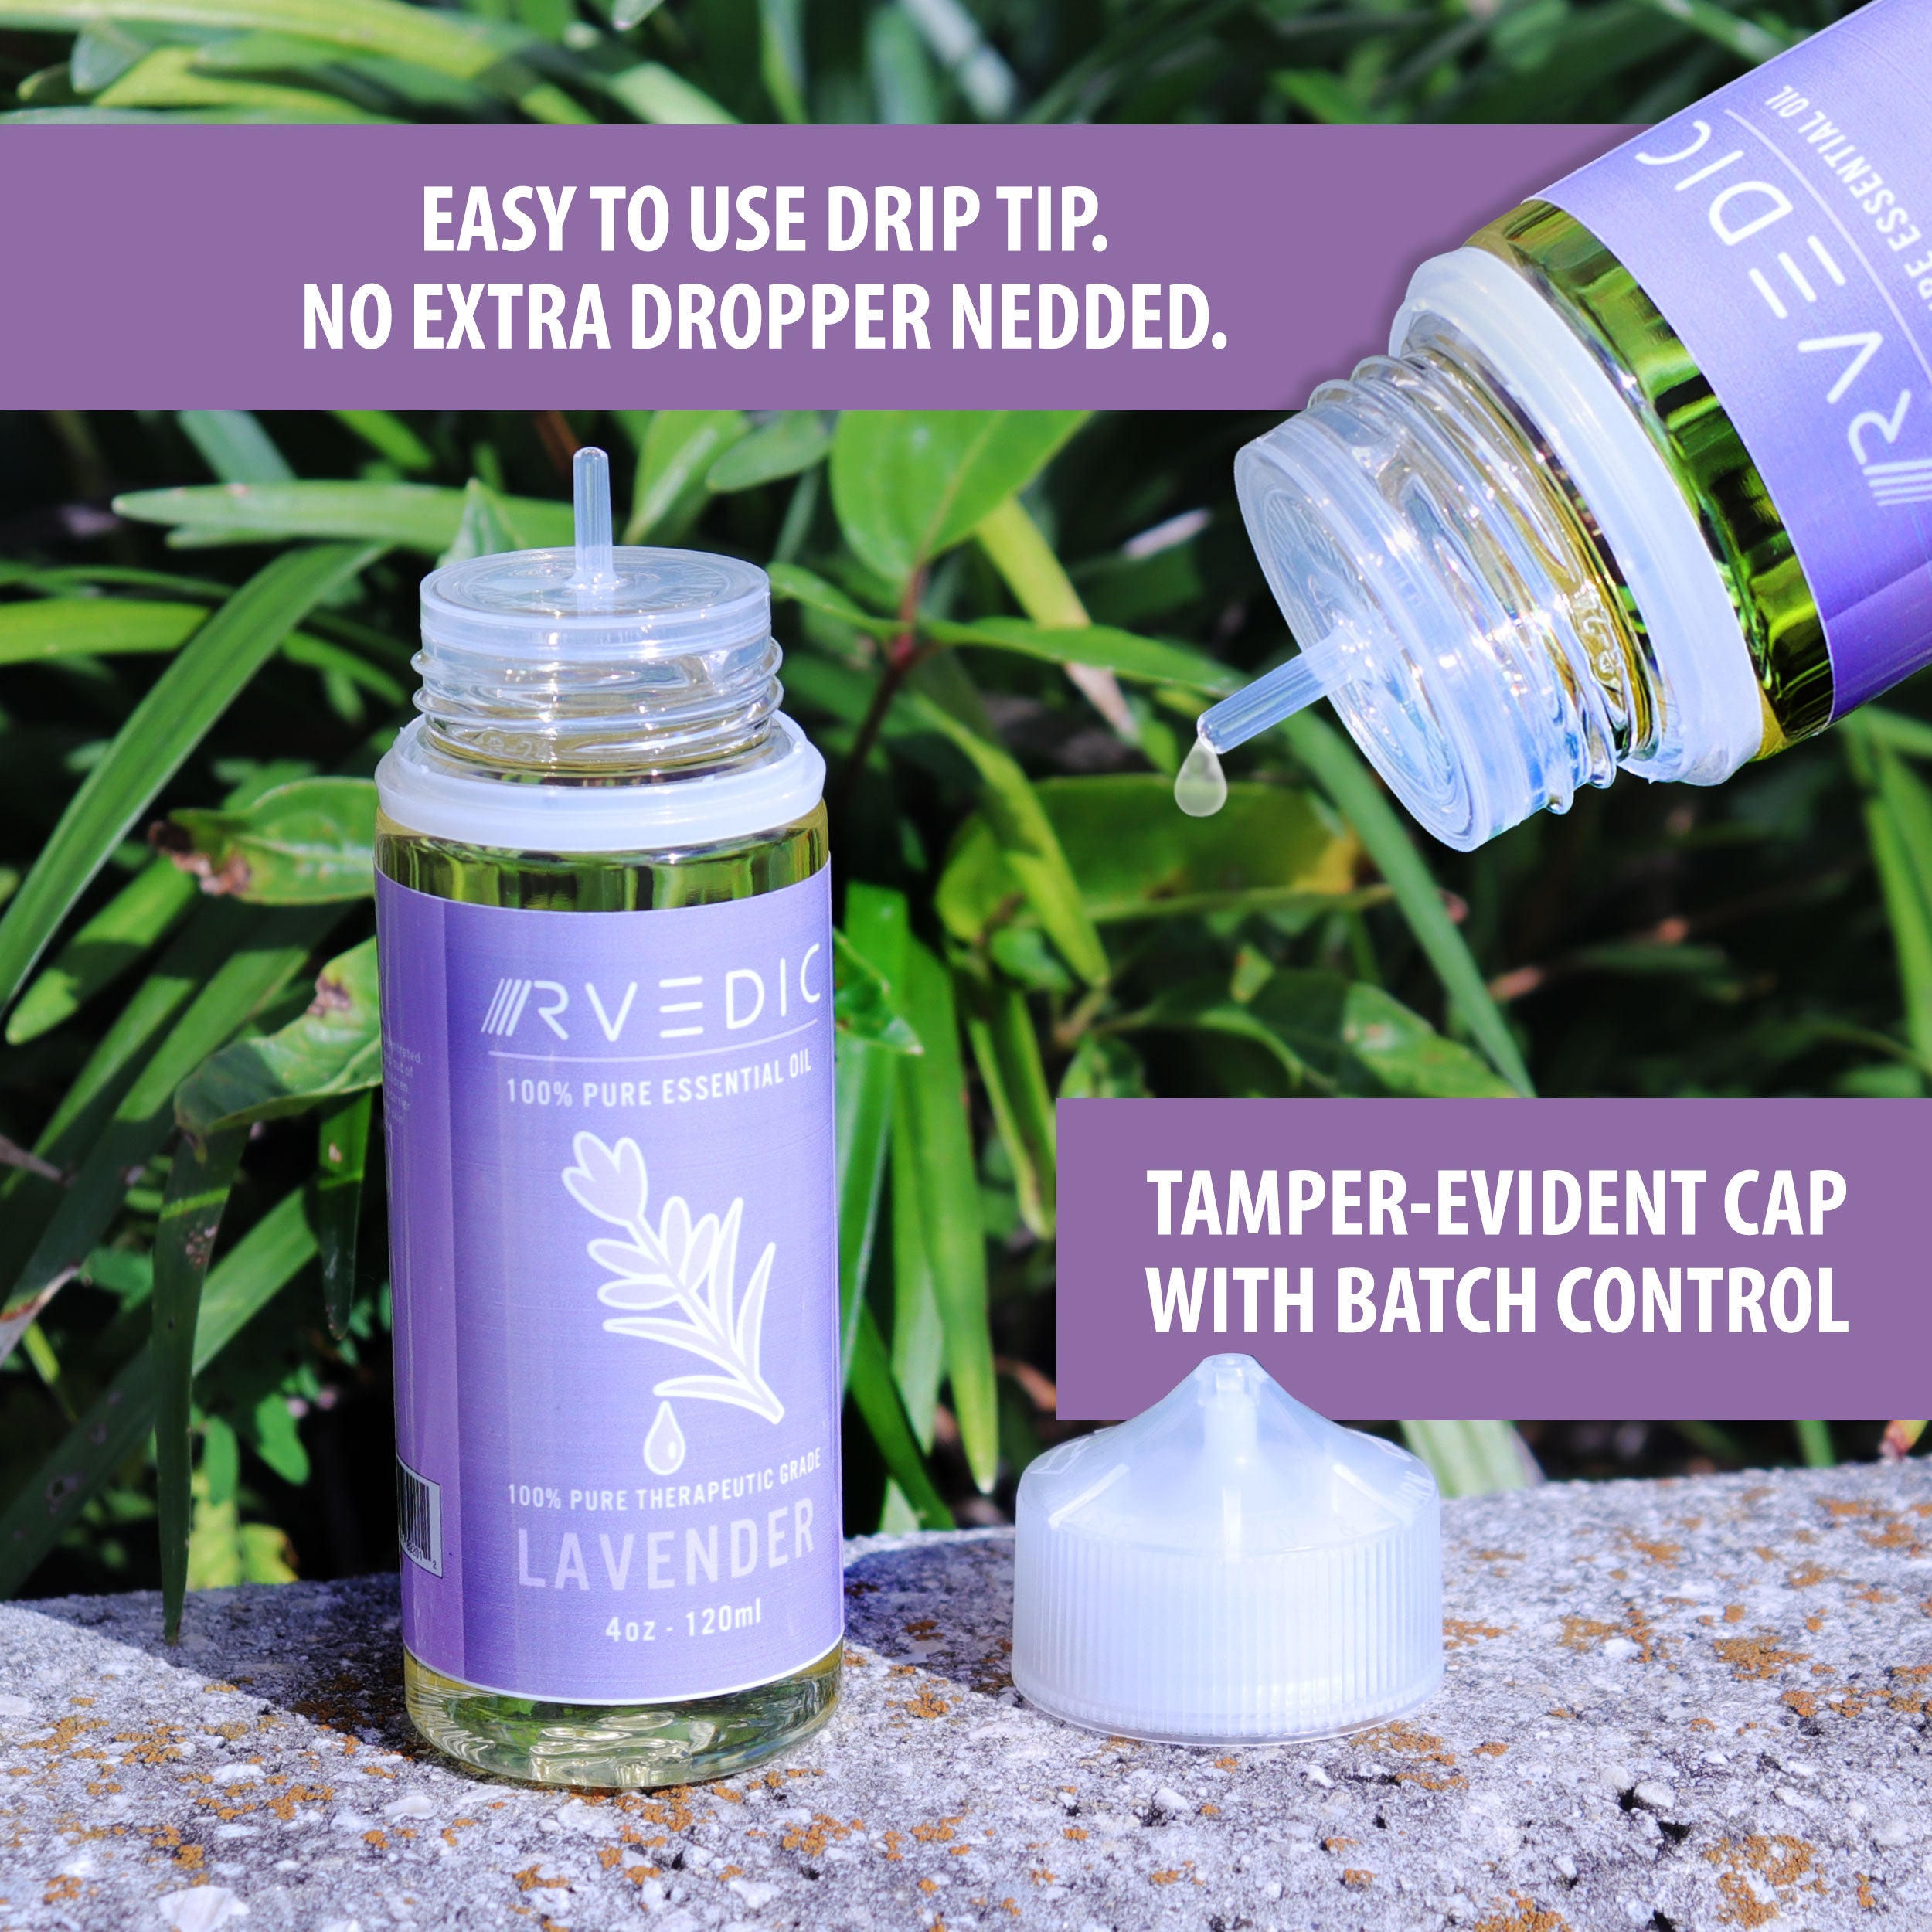 RVEDIC 100% Pure Lavender Essential Oil - 4oz (120mL)